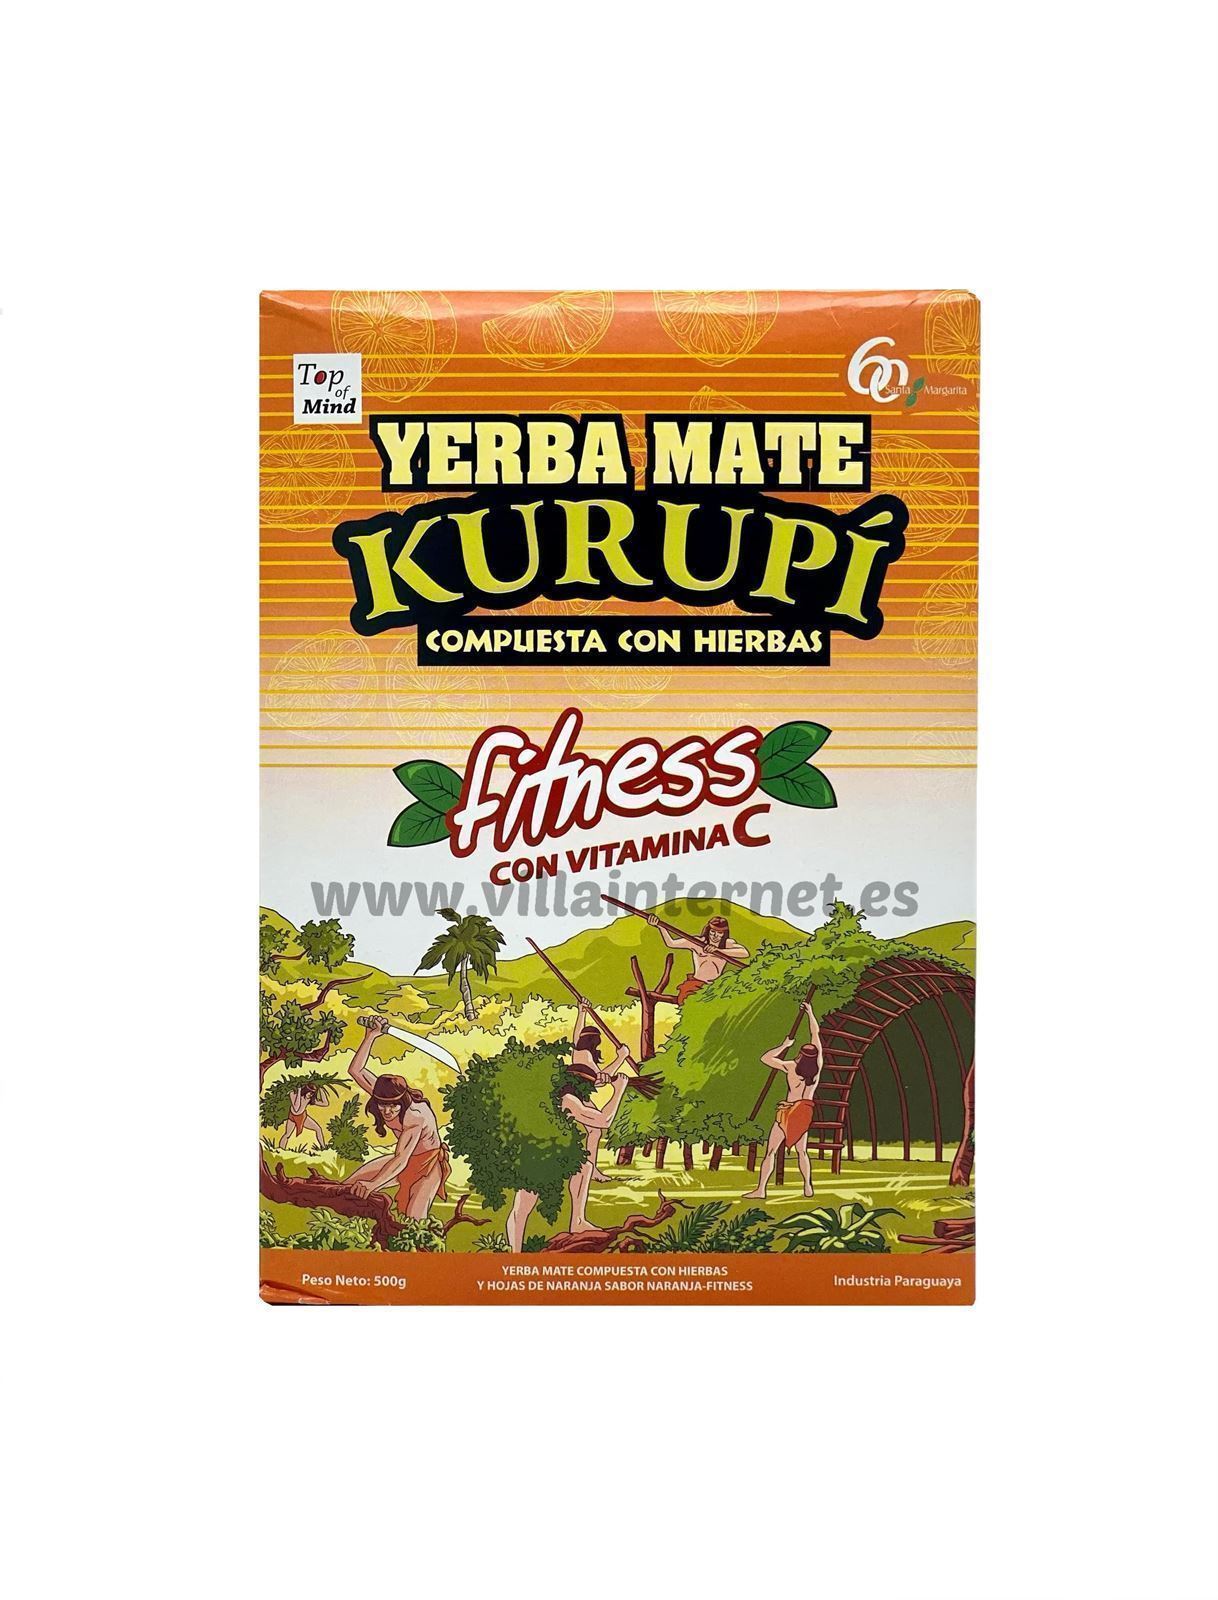 Yerba mate Kurupí fitness con vitamina C sabor naranja 500g - Imagen 1